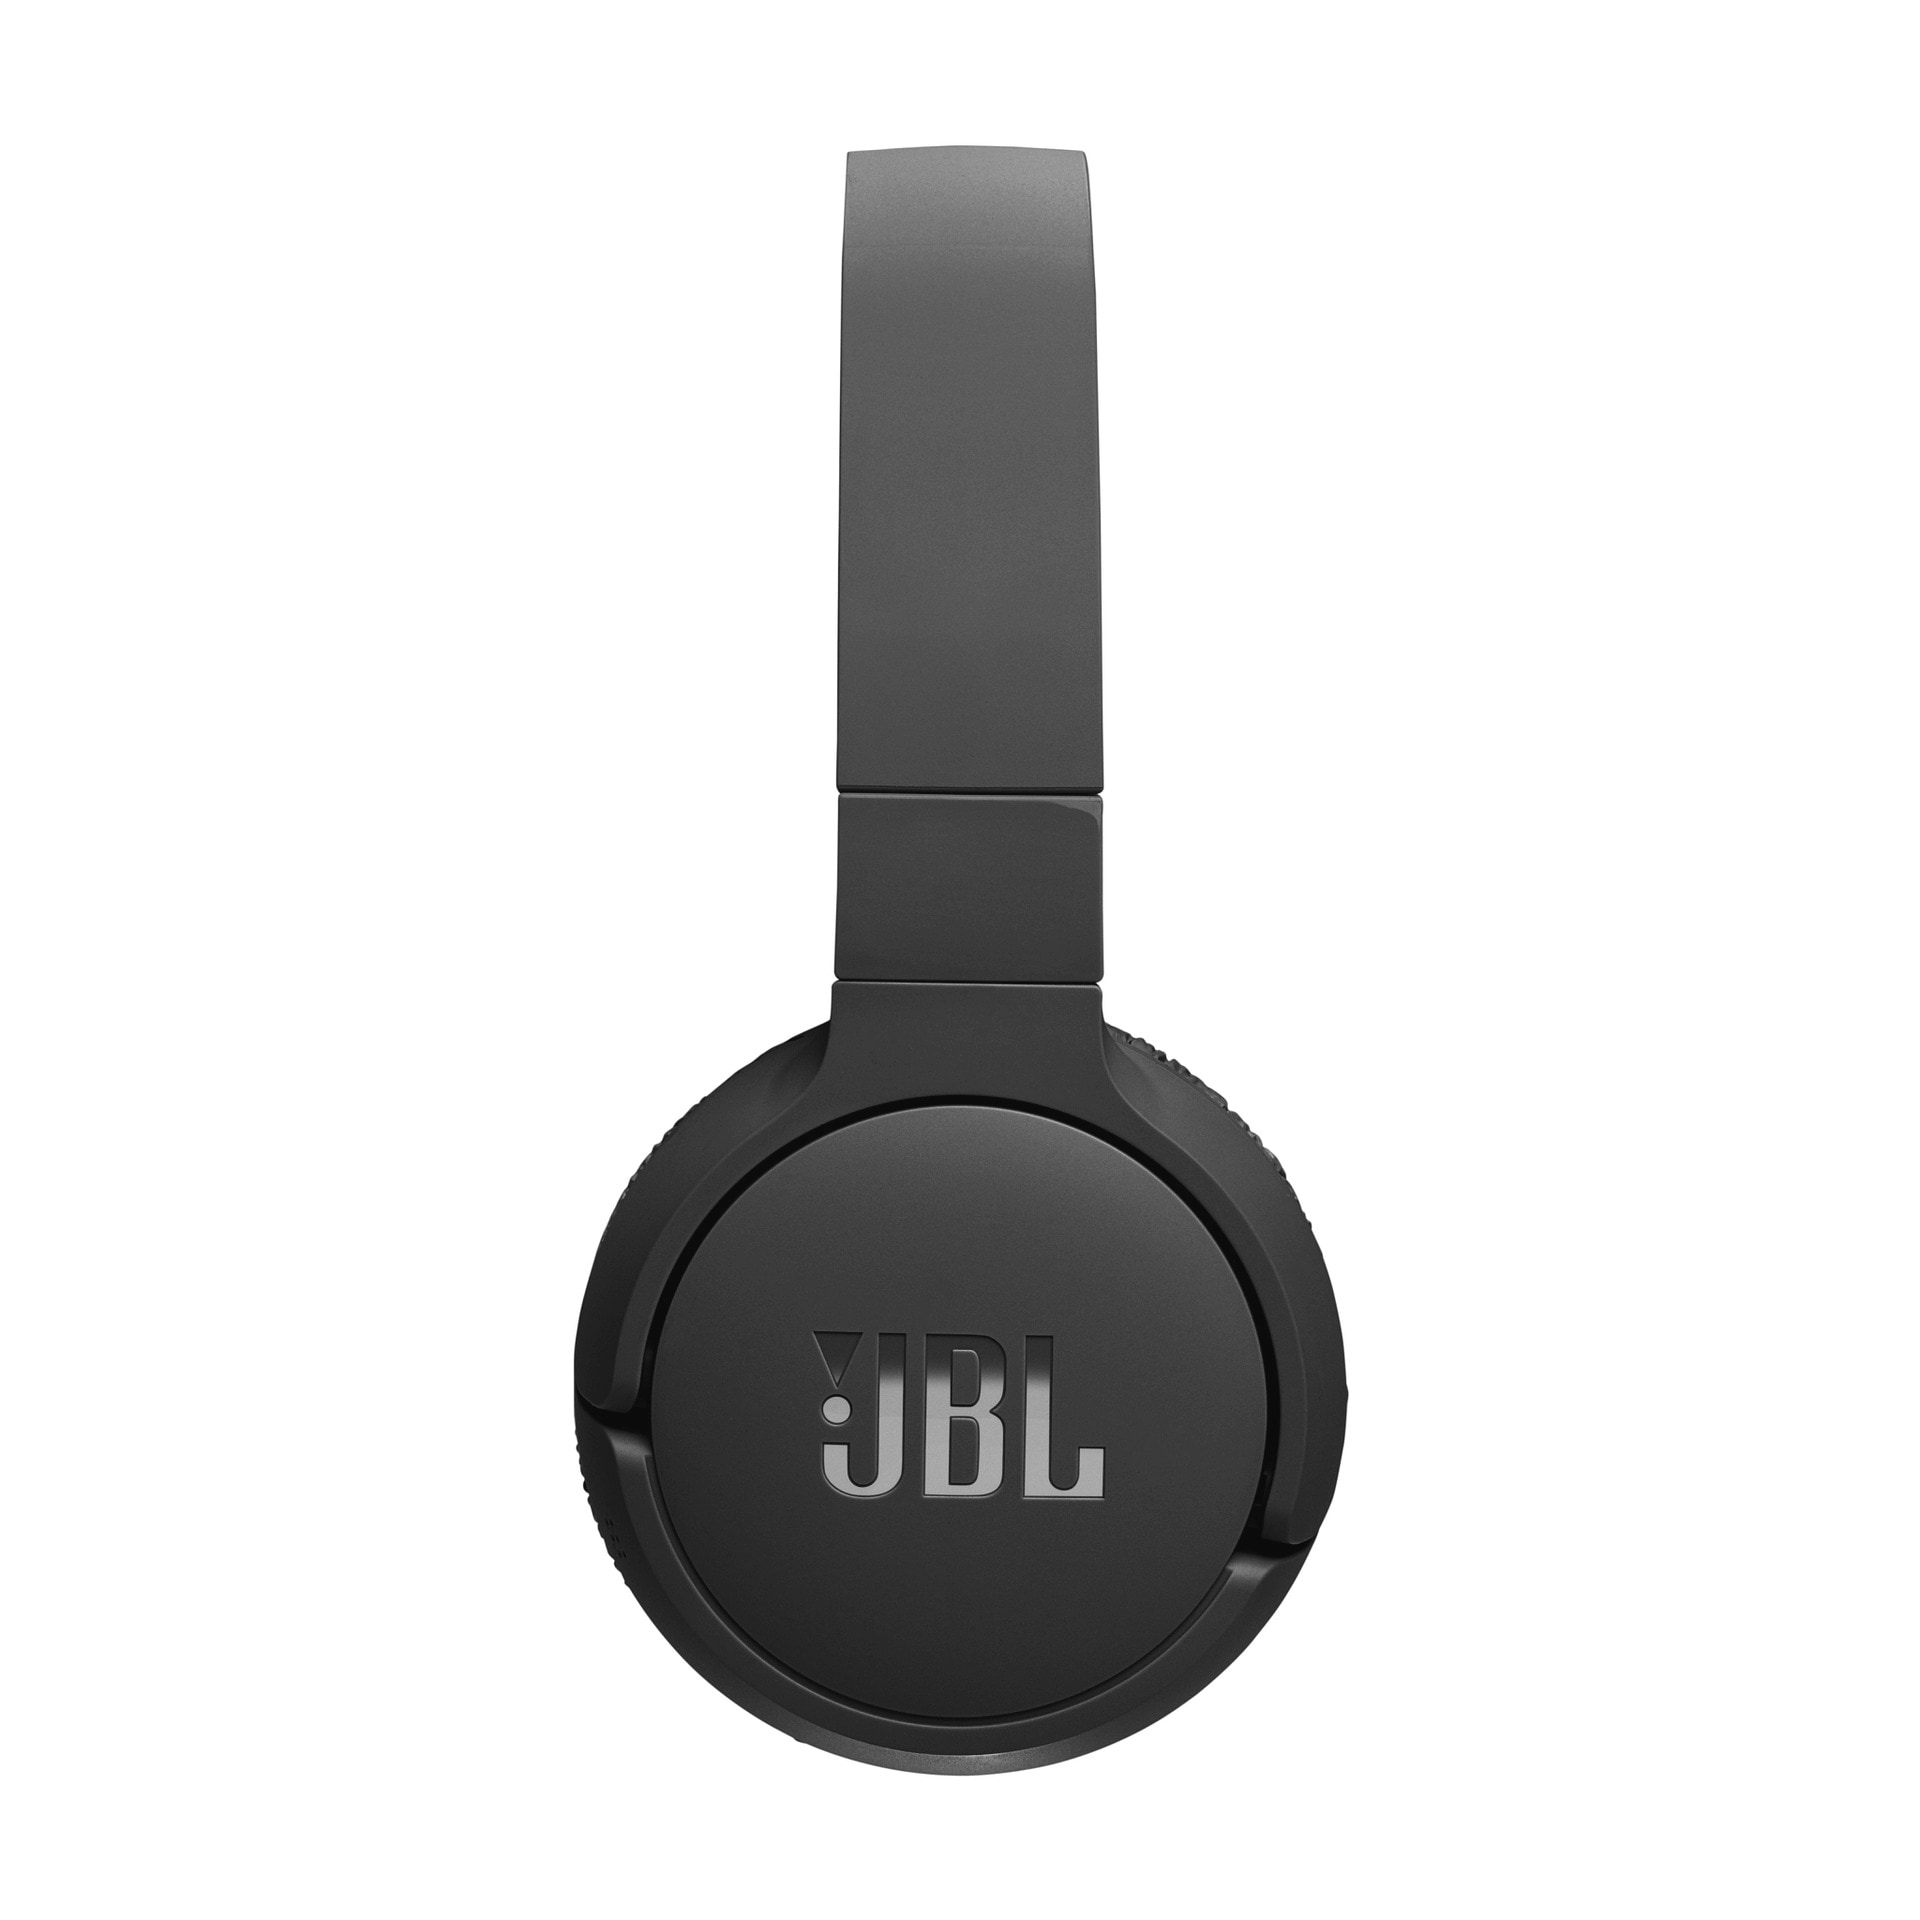 Noise- JBL online Cancelling bei »Tune Adaptive A2DP Bluetooth, 670NC«, jetzt Bluetooth-Kopfhörer OTTO